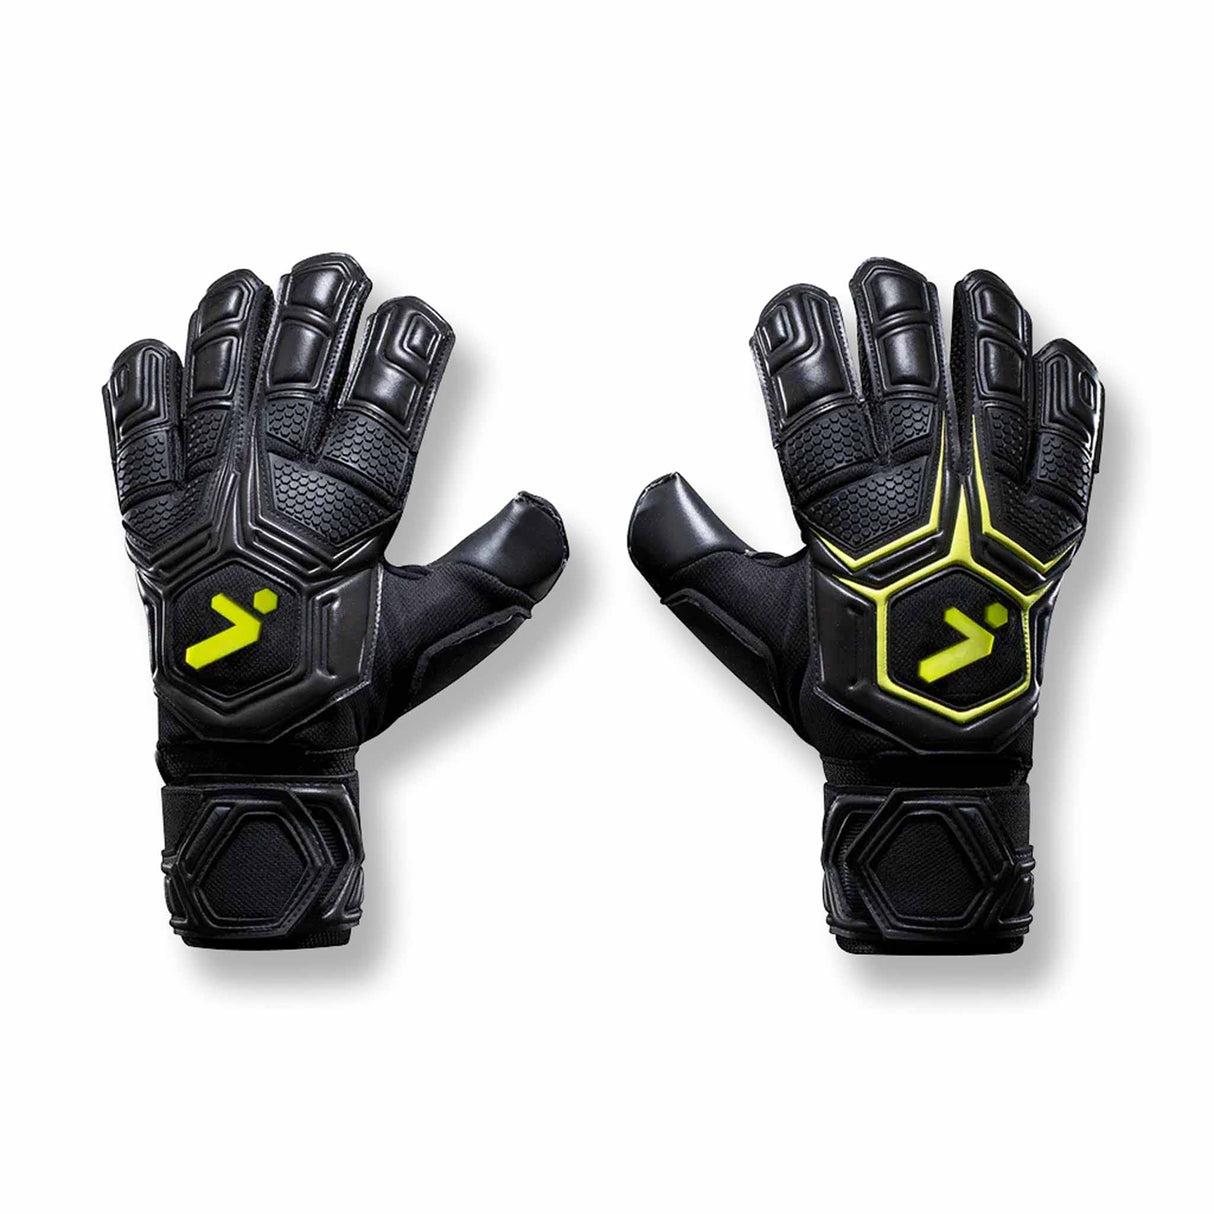 Storelli Gladiator Pro 3 gants de gardien de but de soccer